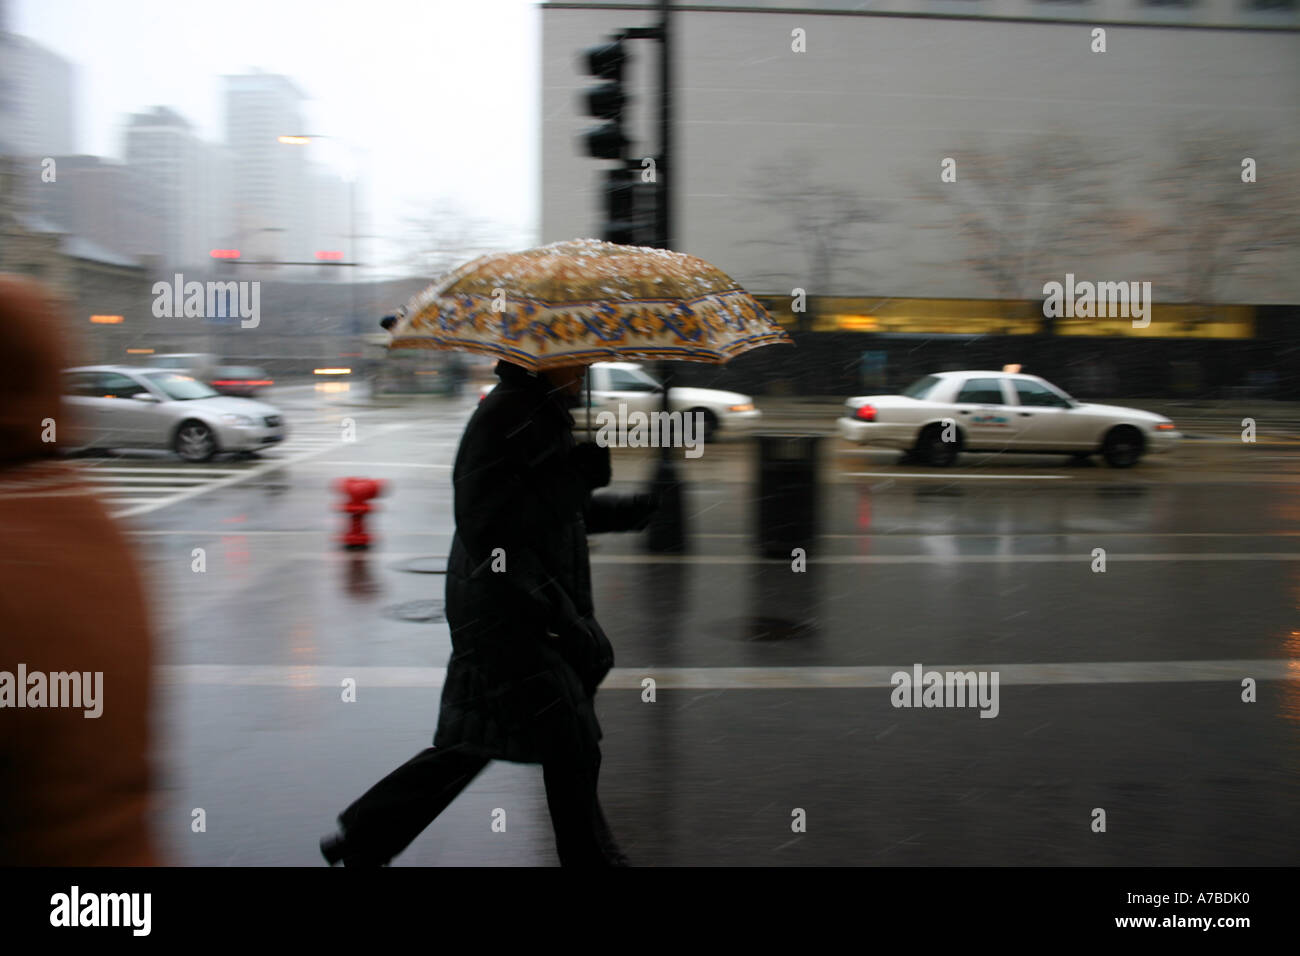 Man with umbrella walking in a rain storm, Michigan Ave. Chicago, IL USA Stock Photo